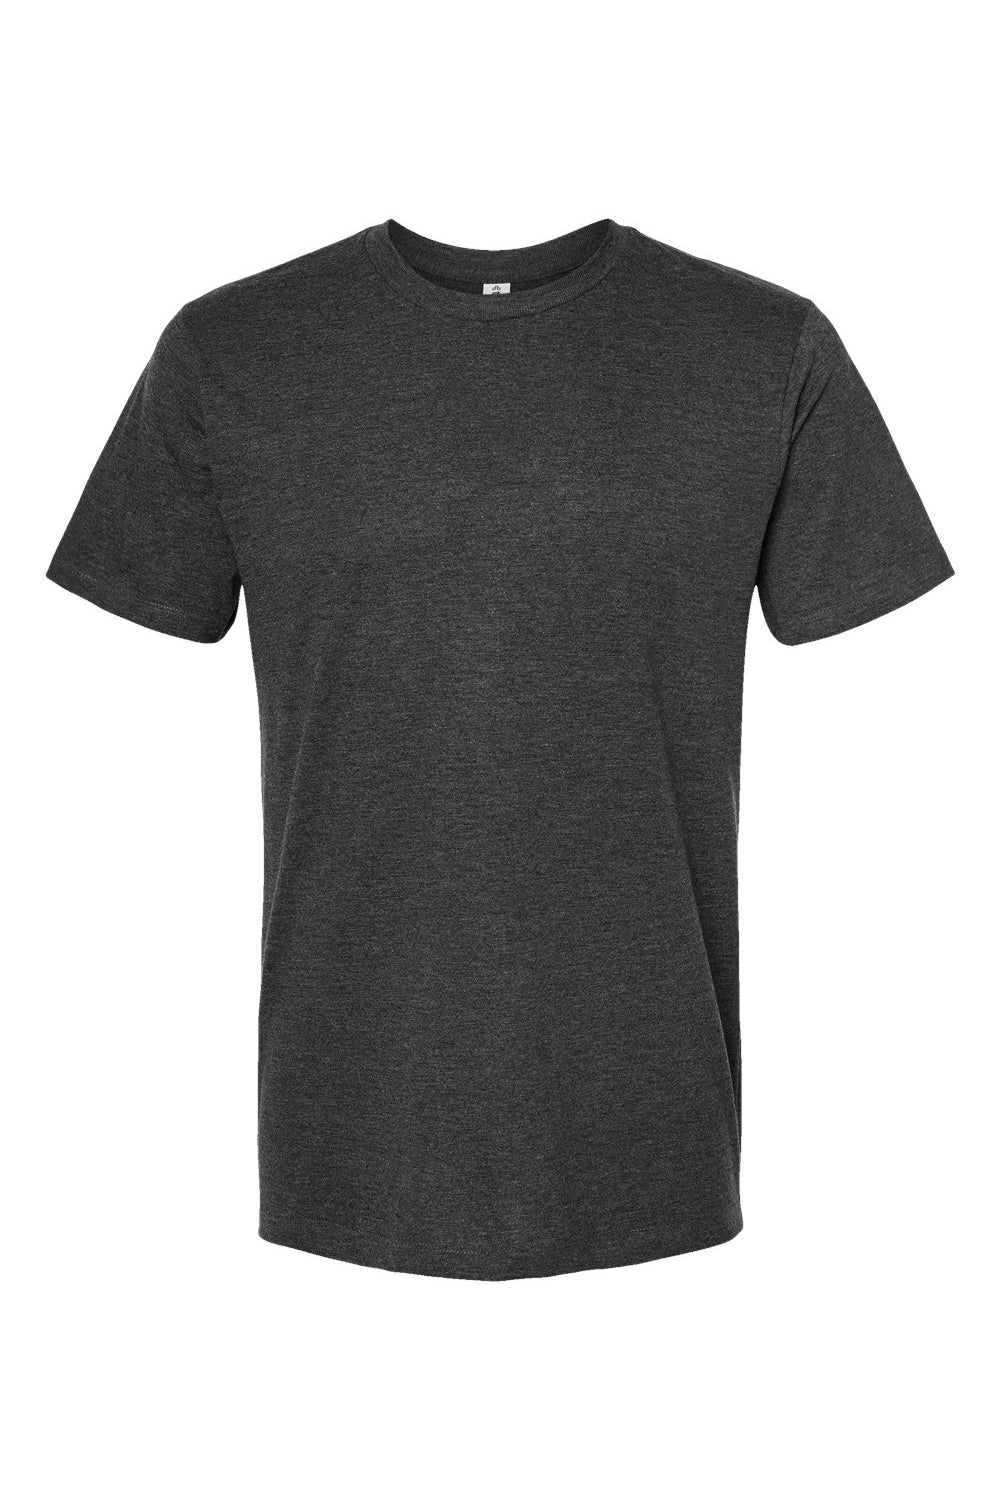 Tultex 541 Mens Premium Short Sleeve Crewneck T-Shirt Heather Black Flat Front